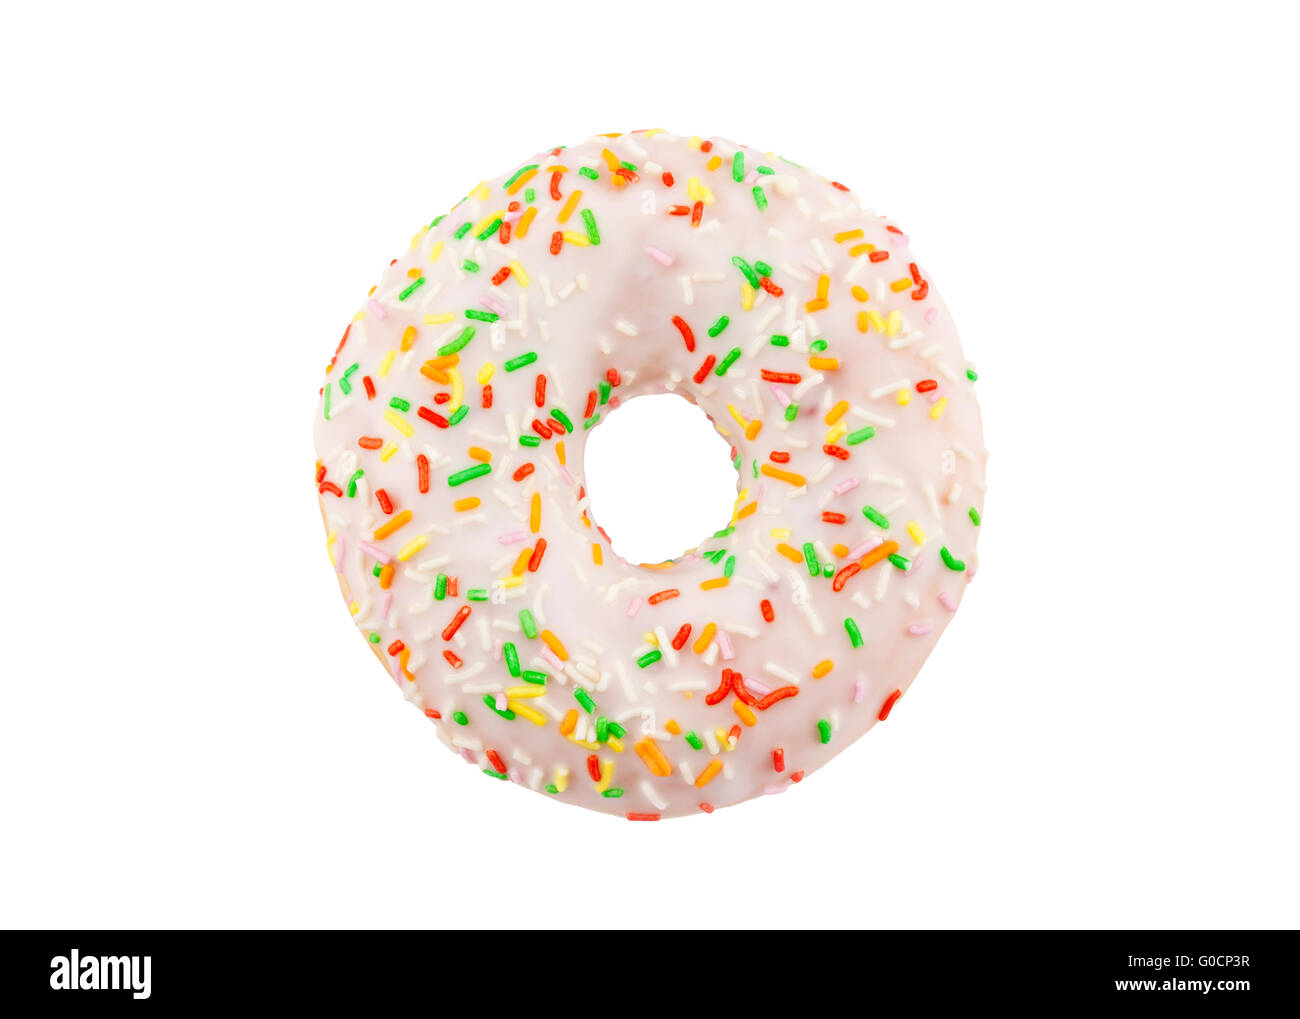 Donut con coloridos lloviznas aisladas sobre fondo blanco. Foto de stock